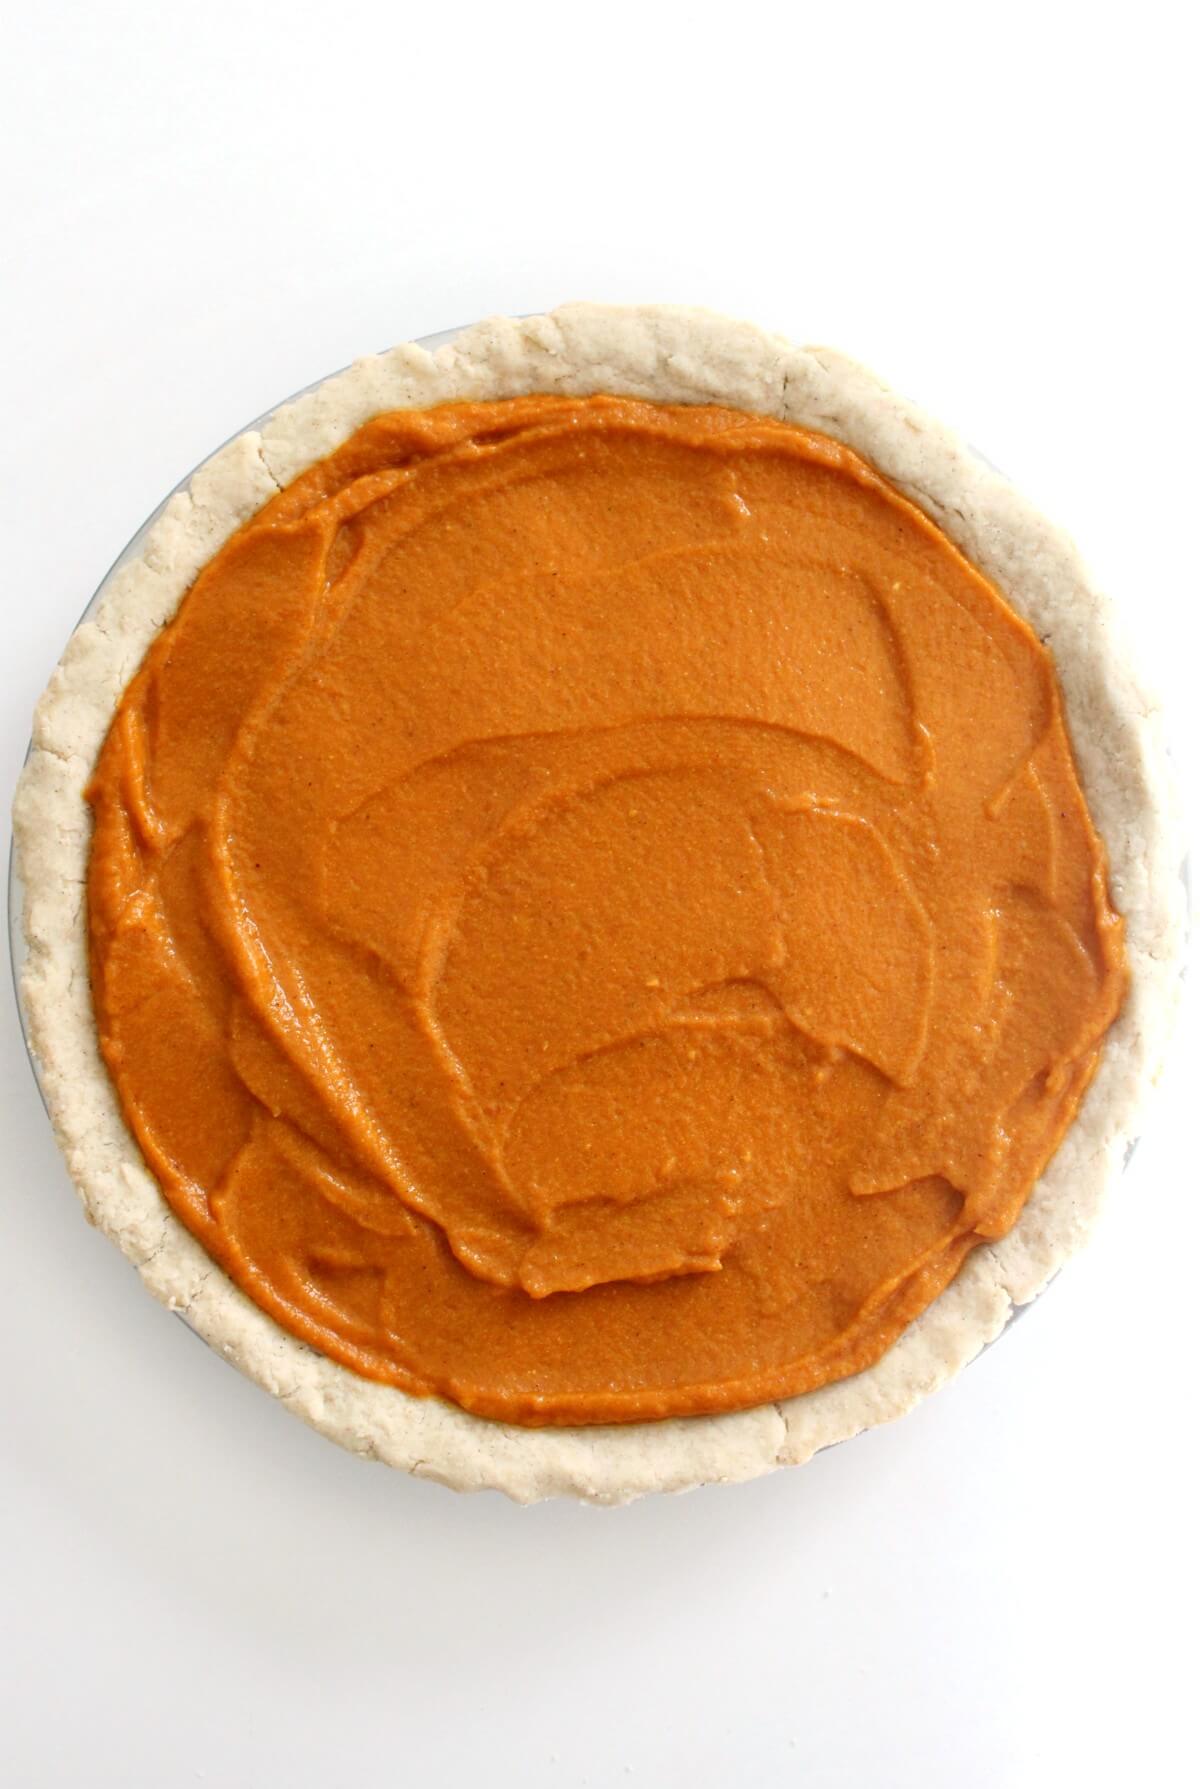 vegan pumpkin pie filling poured into unbaked pie shell